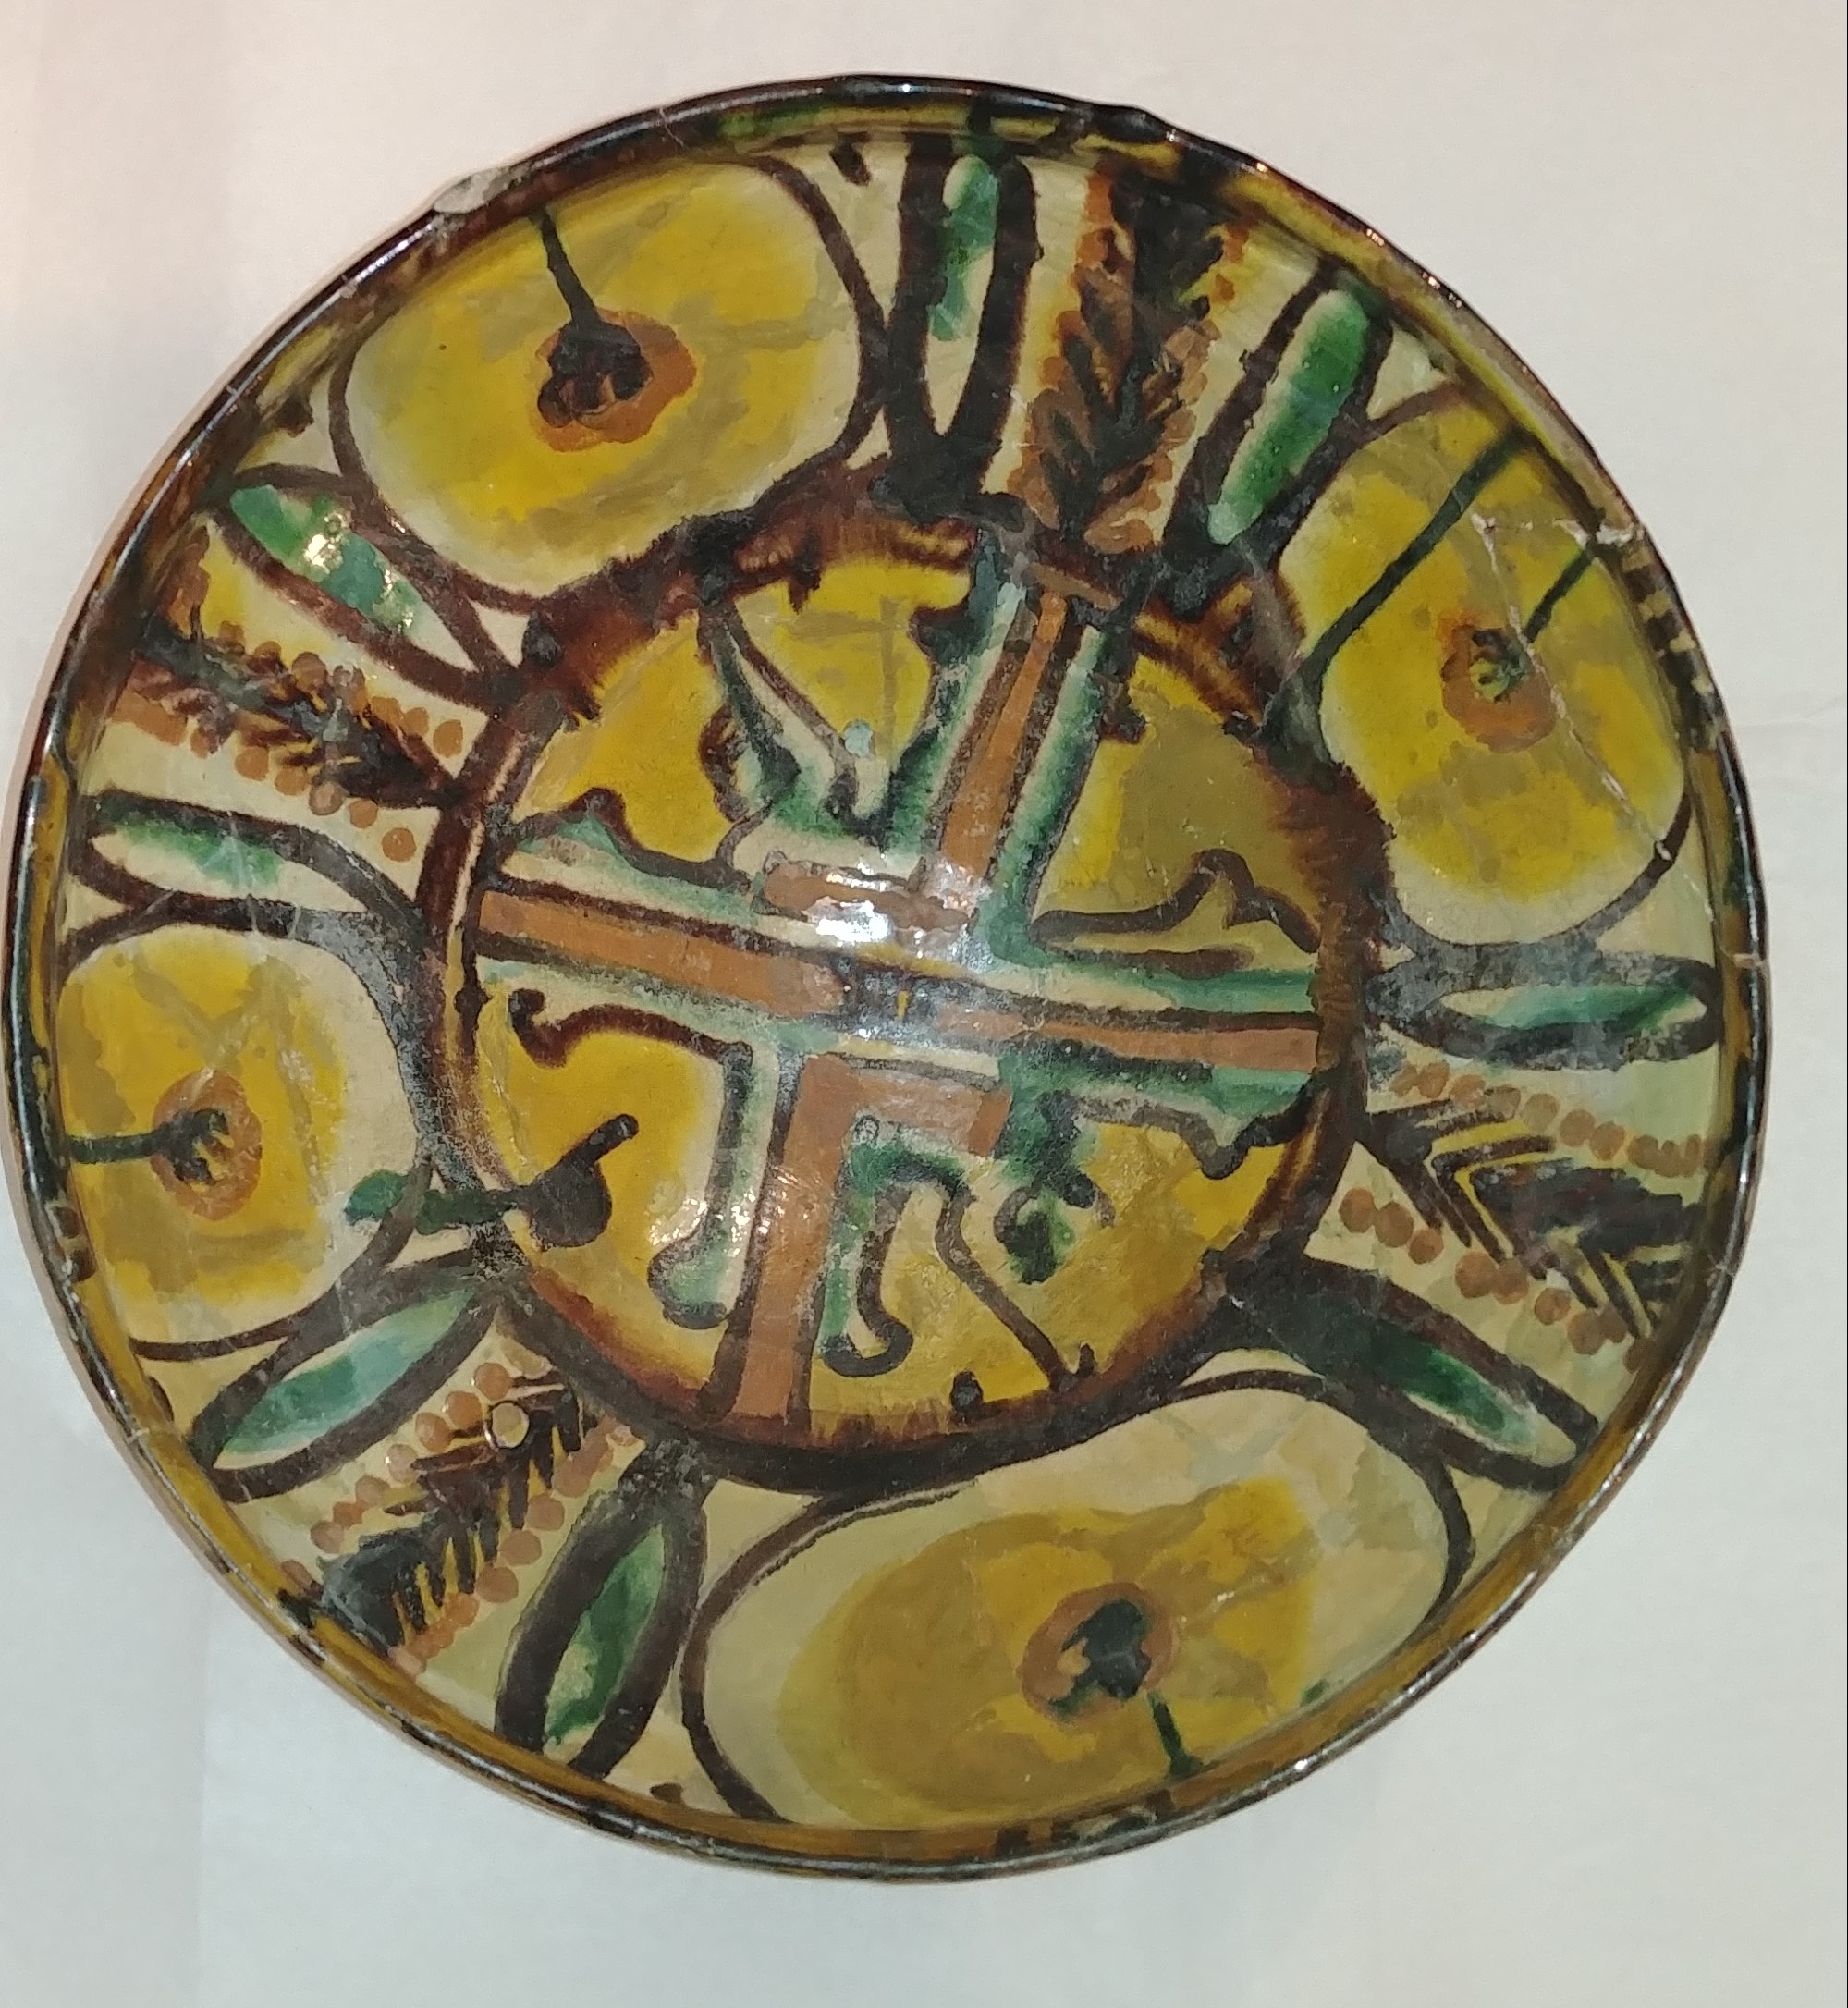 A Nishapur Bowl with Geometric Design, Iran 10th century AD